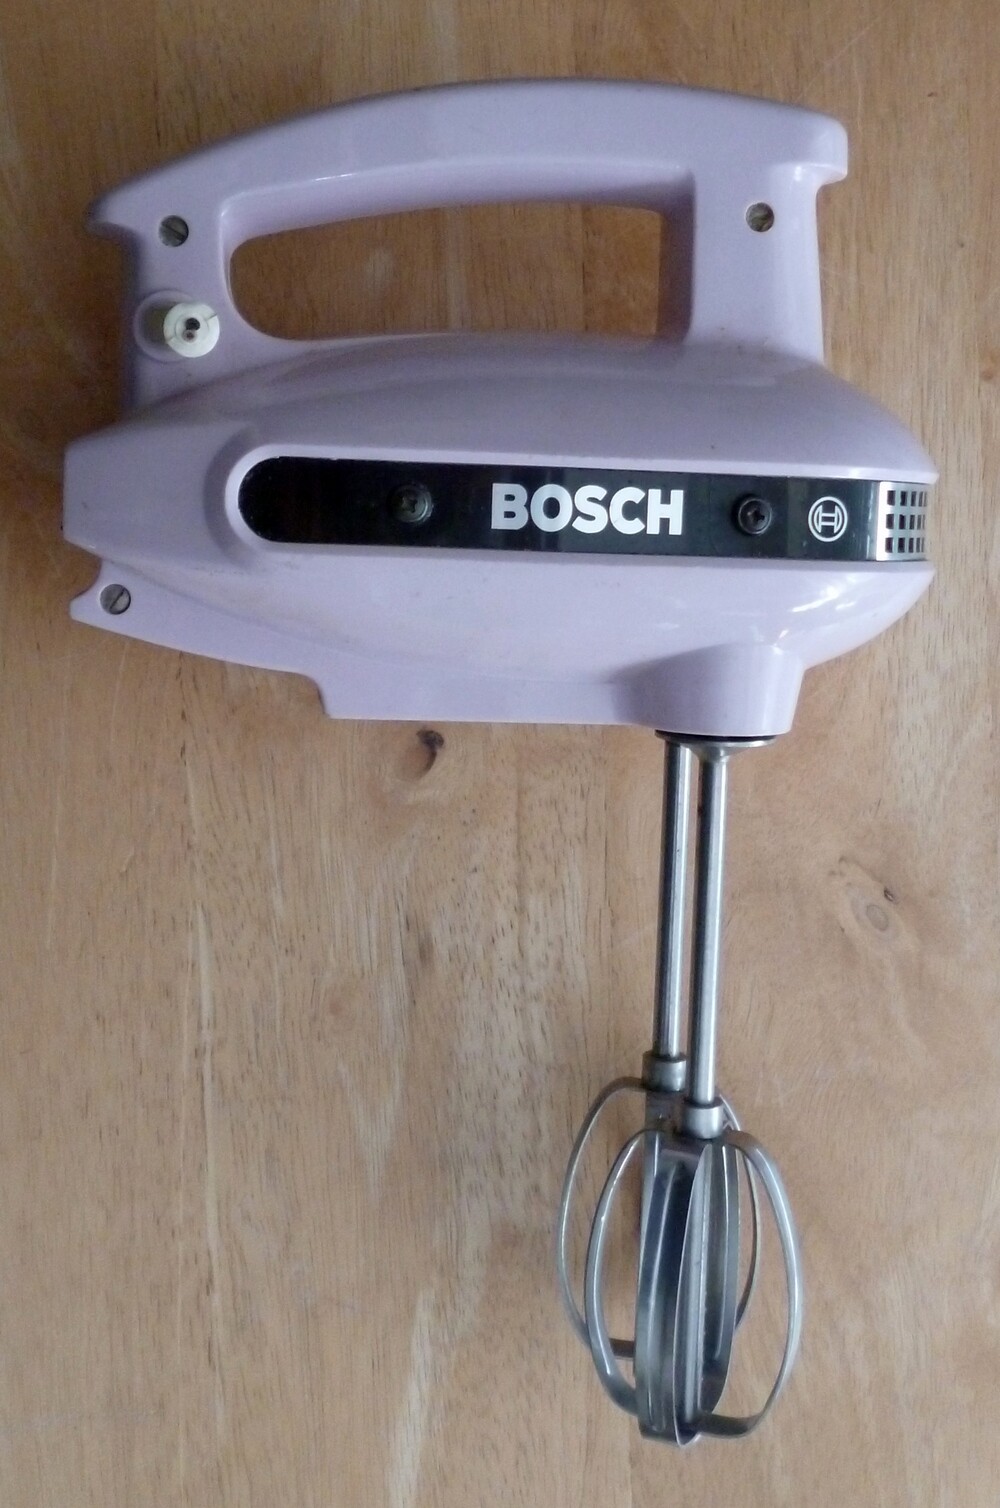 Bosch Handrührgerät (Kulturverein Guntersblum CC BY-NC-SA)